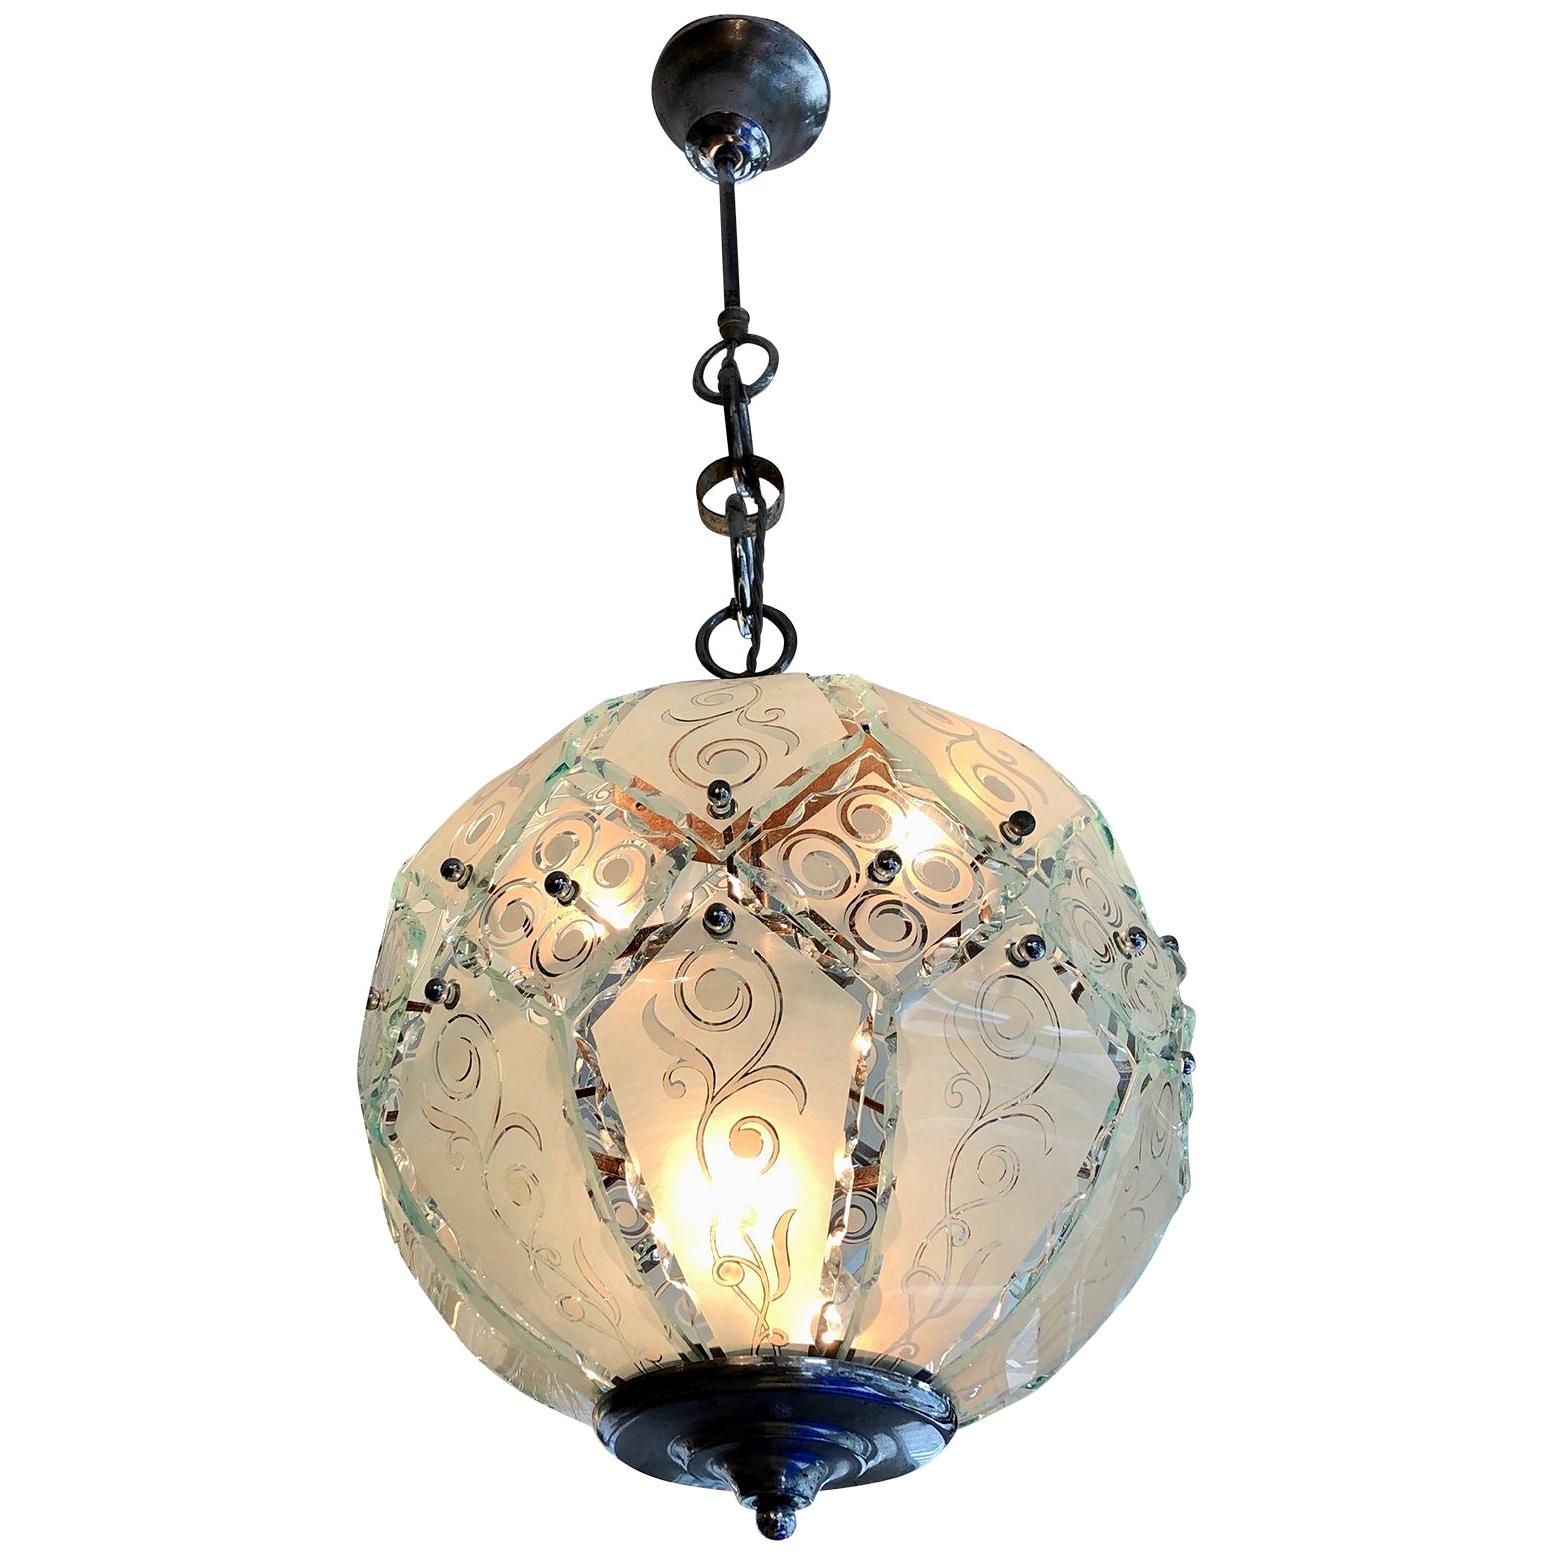 One Midcentury Italian Pastel Aqua Segmented Glass Pendant Ceiling Globe Light